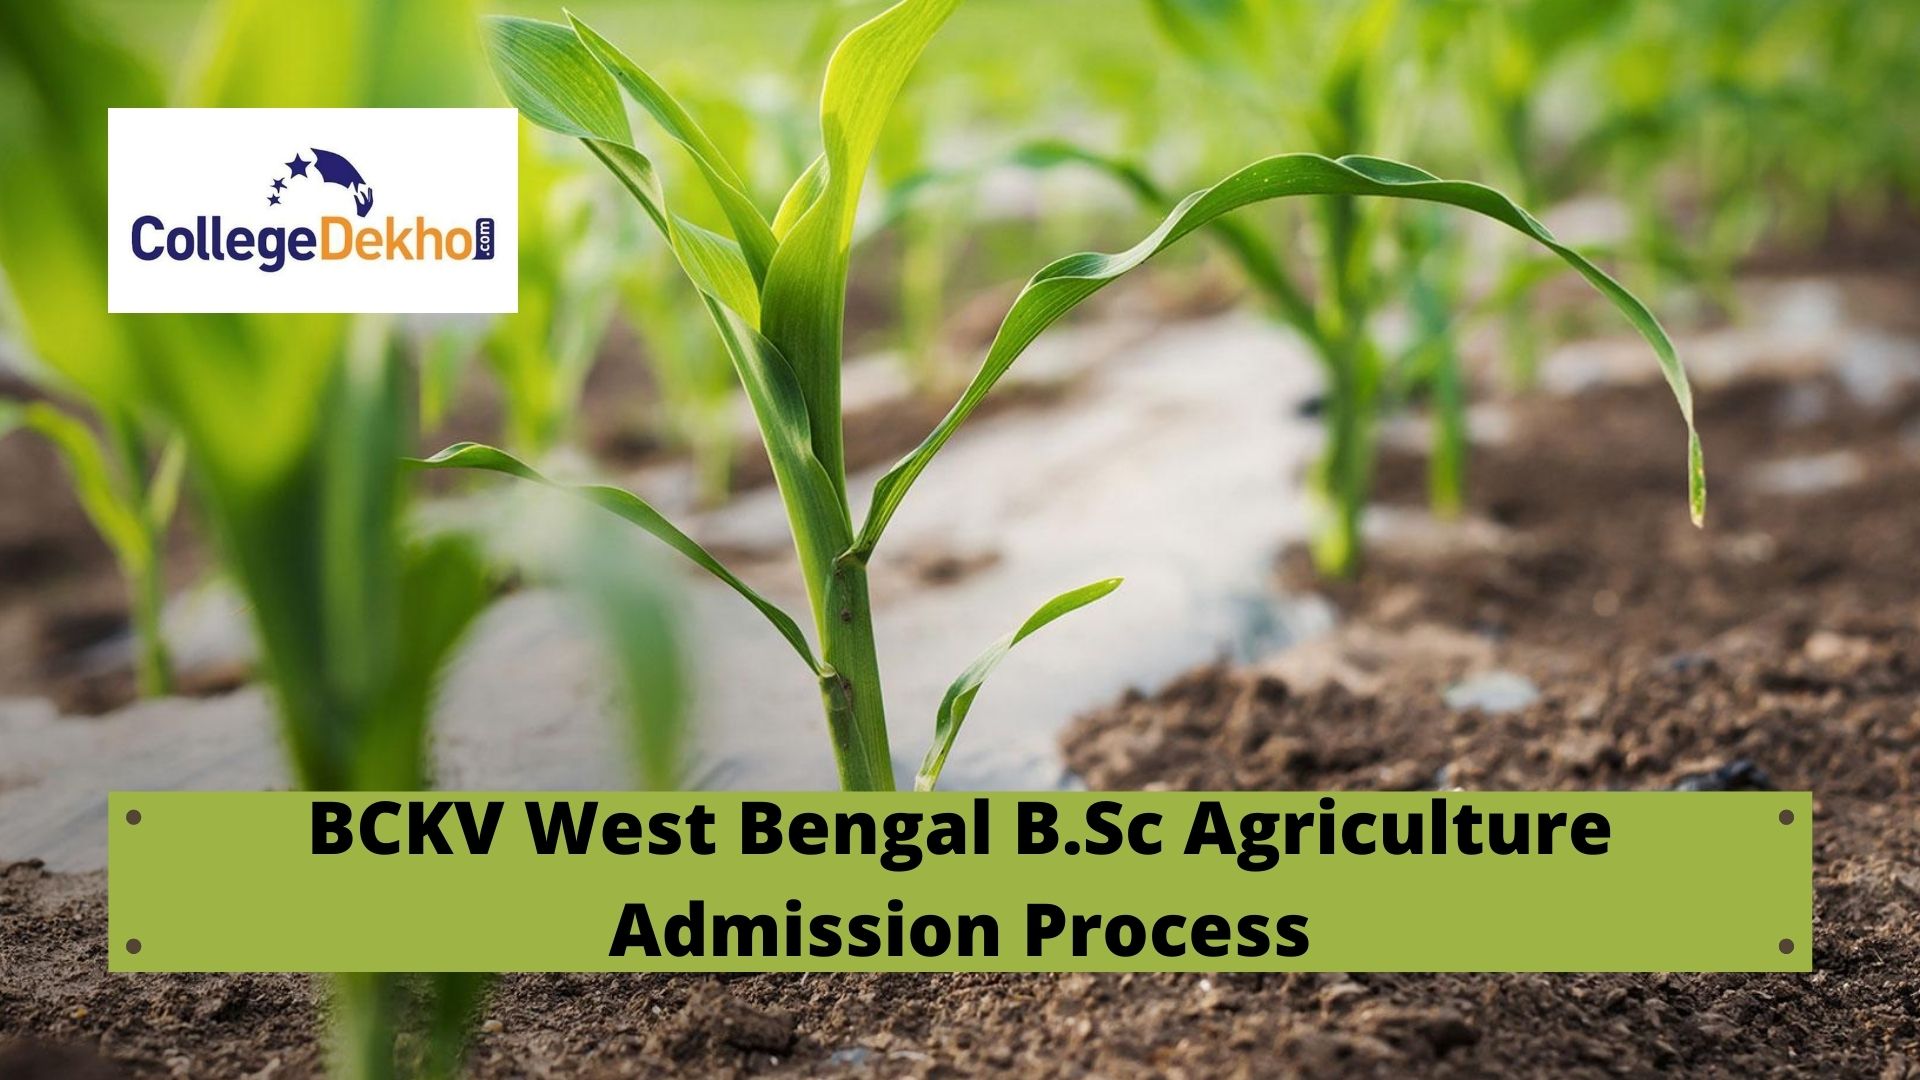 BCKV West Bengal B.Sc Agriculture Admission 2022 - Dates, Application Form (Out), Eligibility Criteria, Merit List, Counselling Process, Seat Matrix